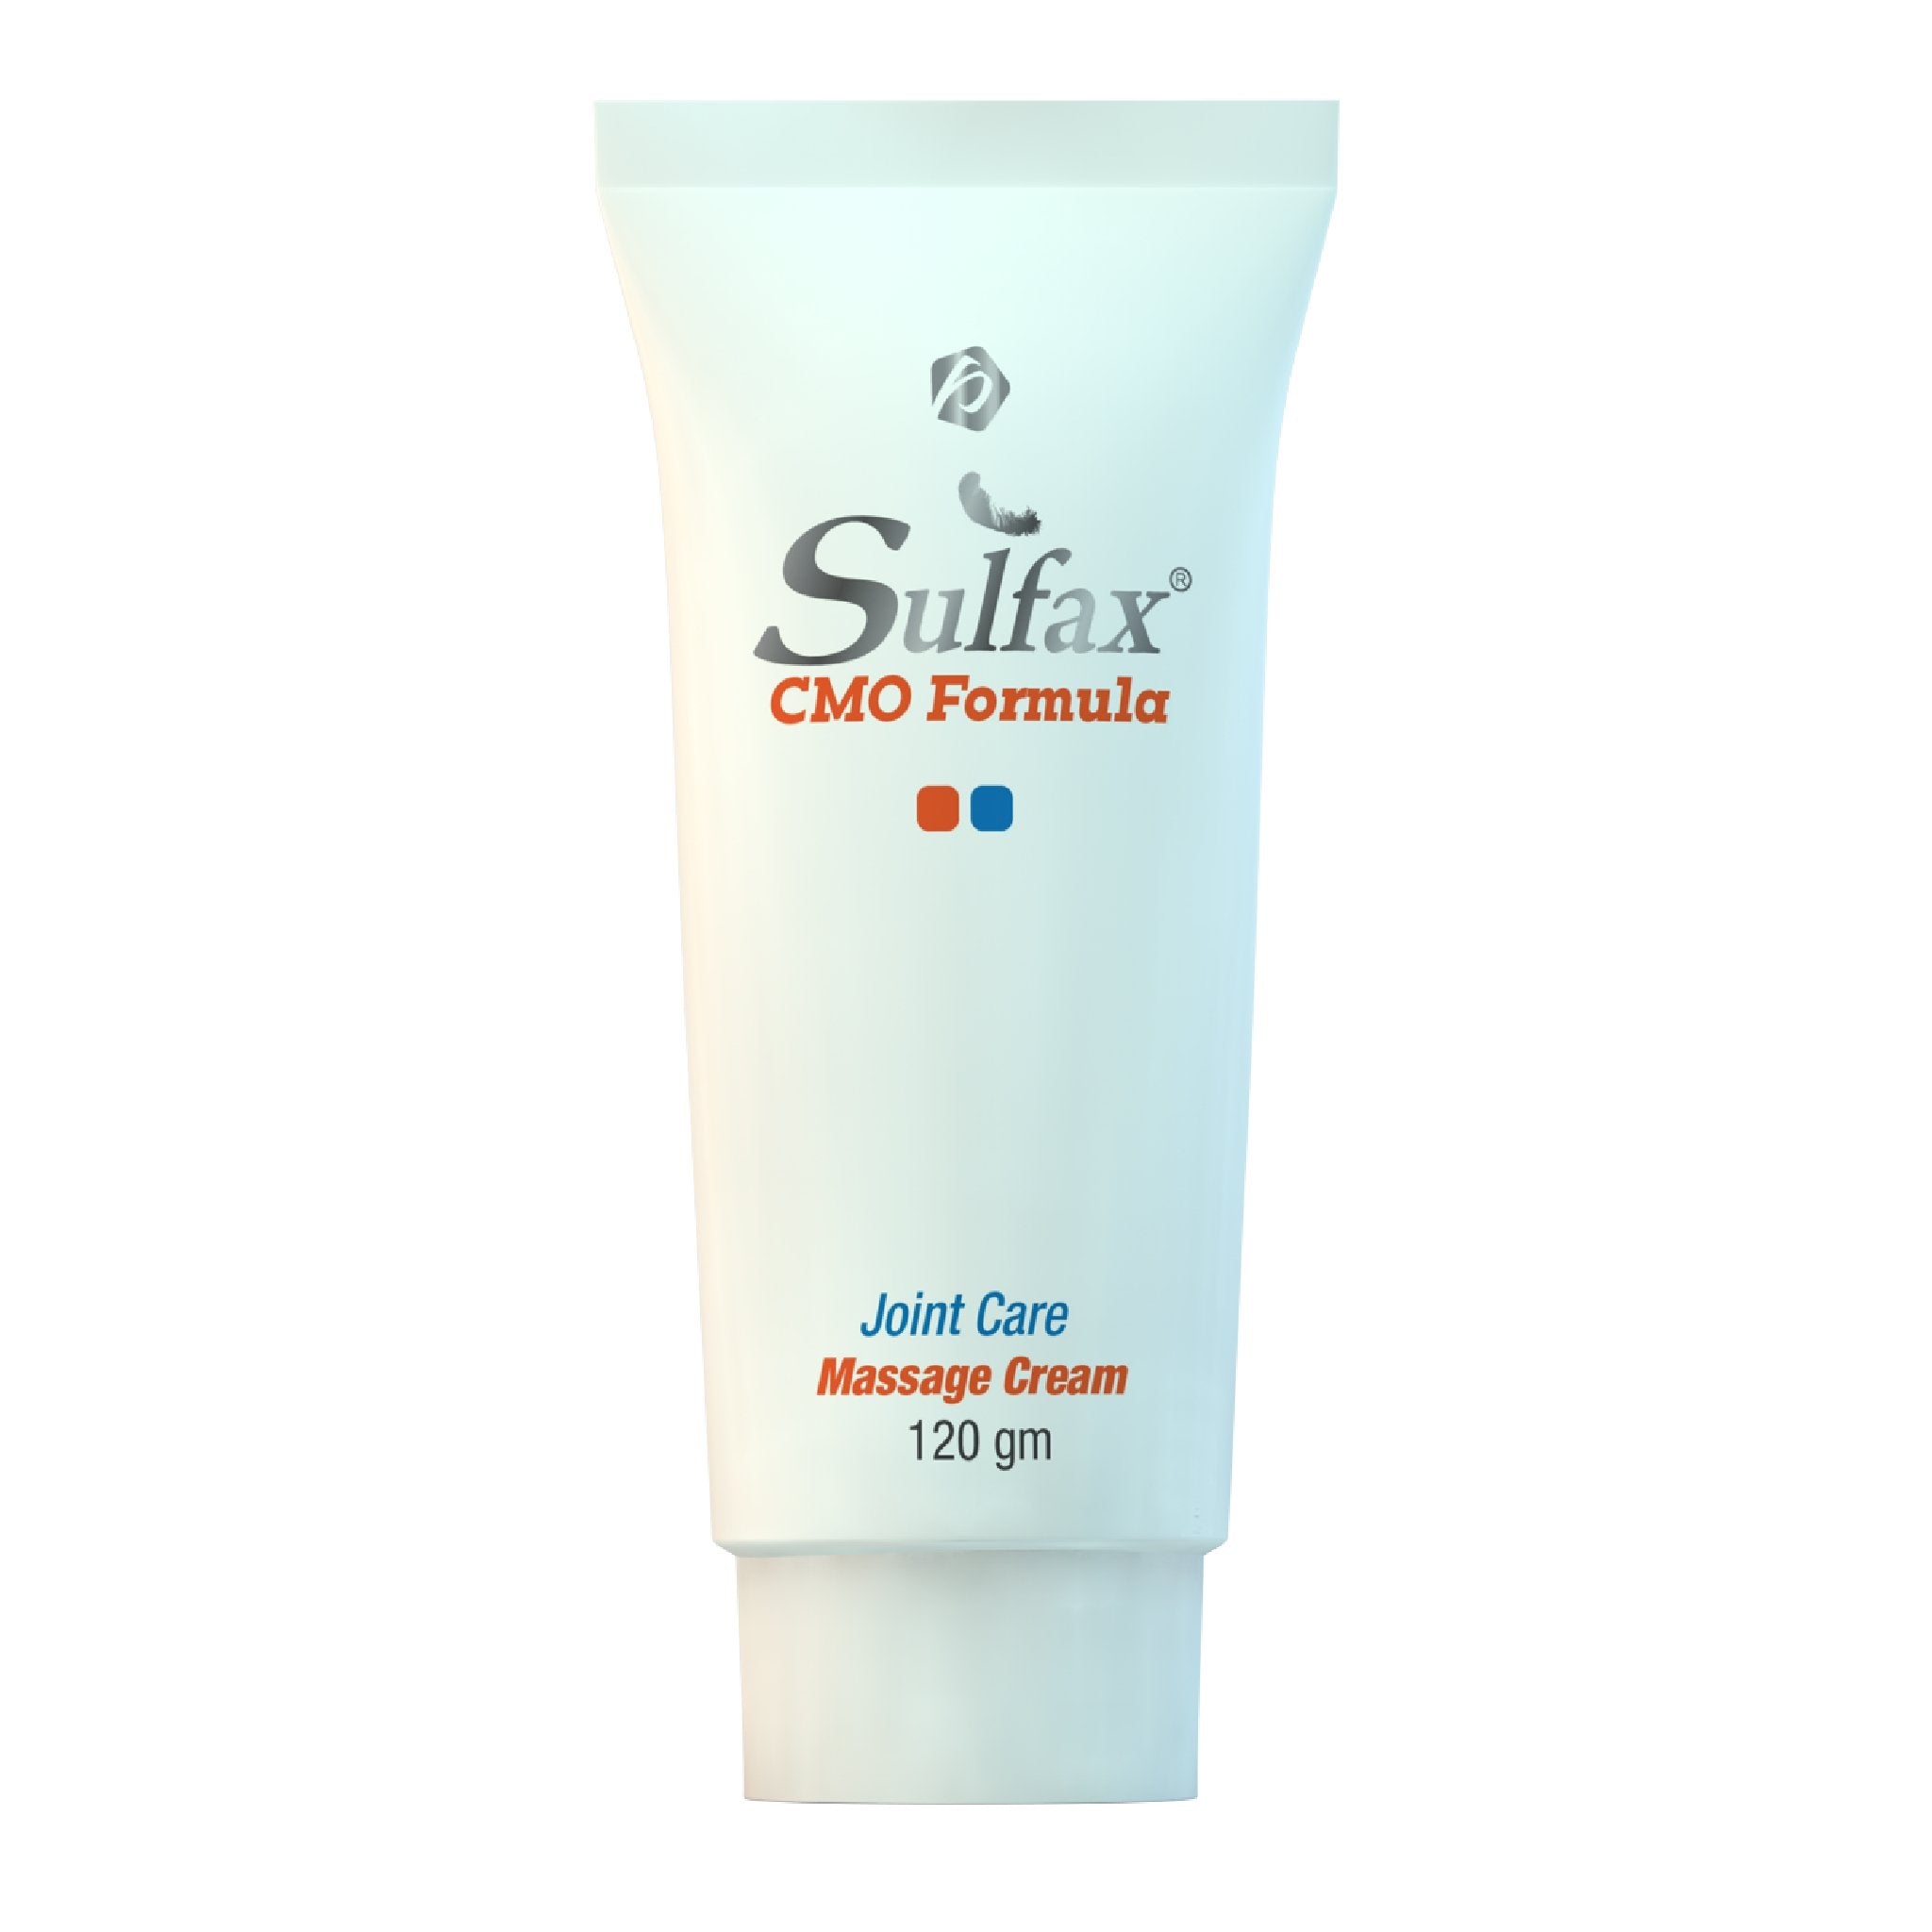 Sulfax CMO cream 120 gm